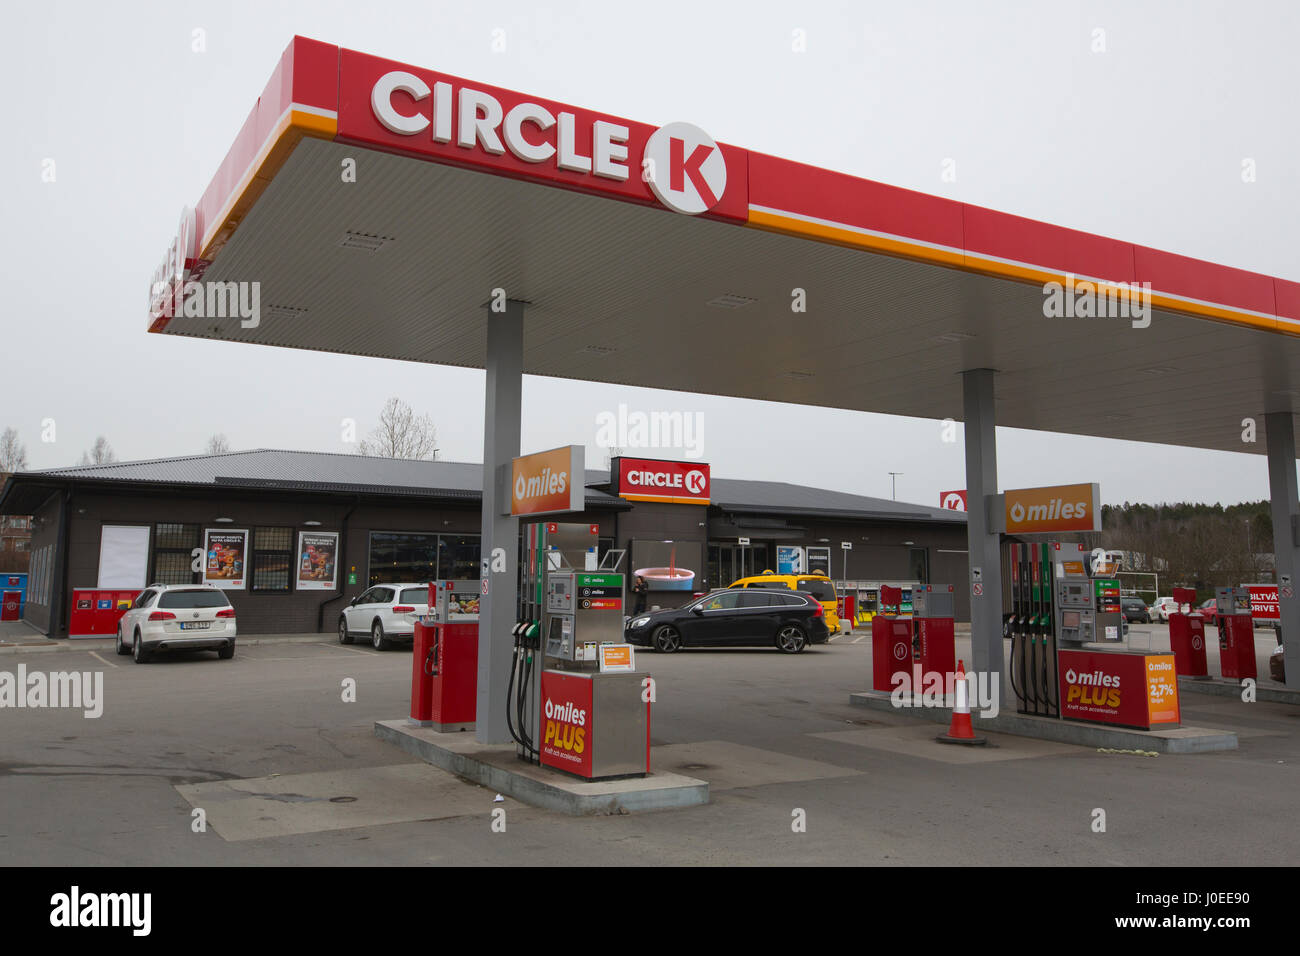 Circle k petrol hi-res stock photography and images - Alamy